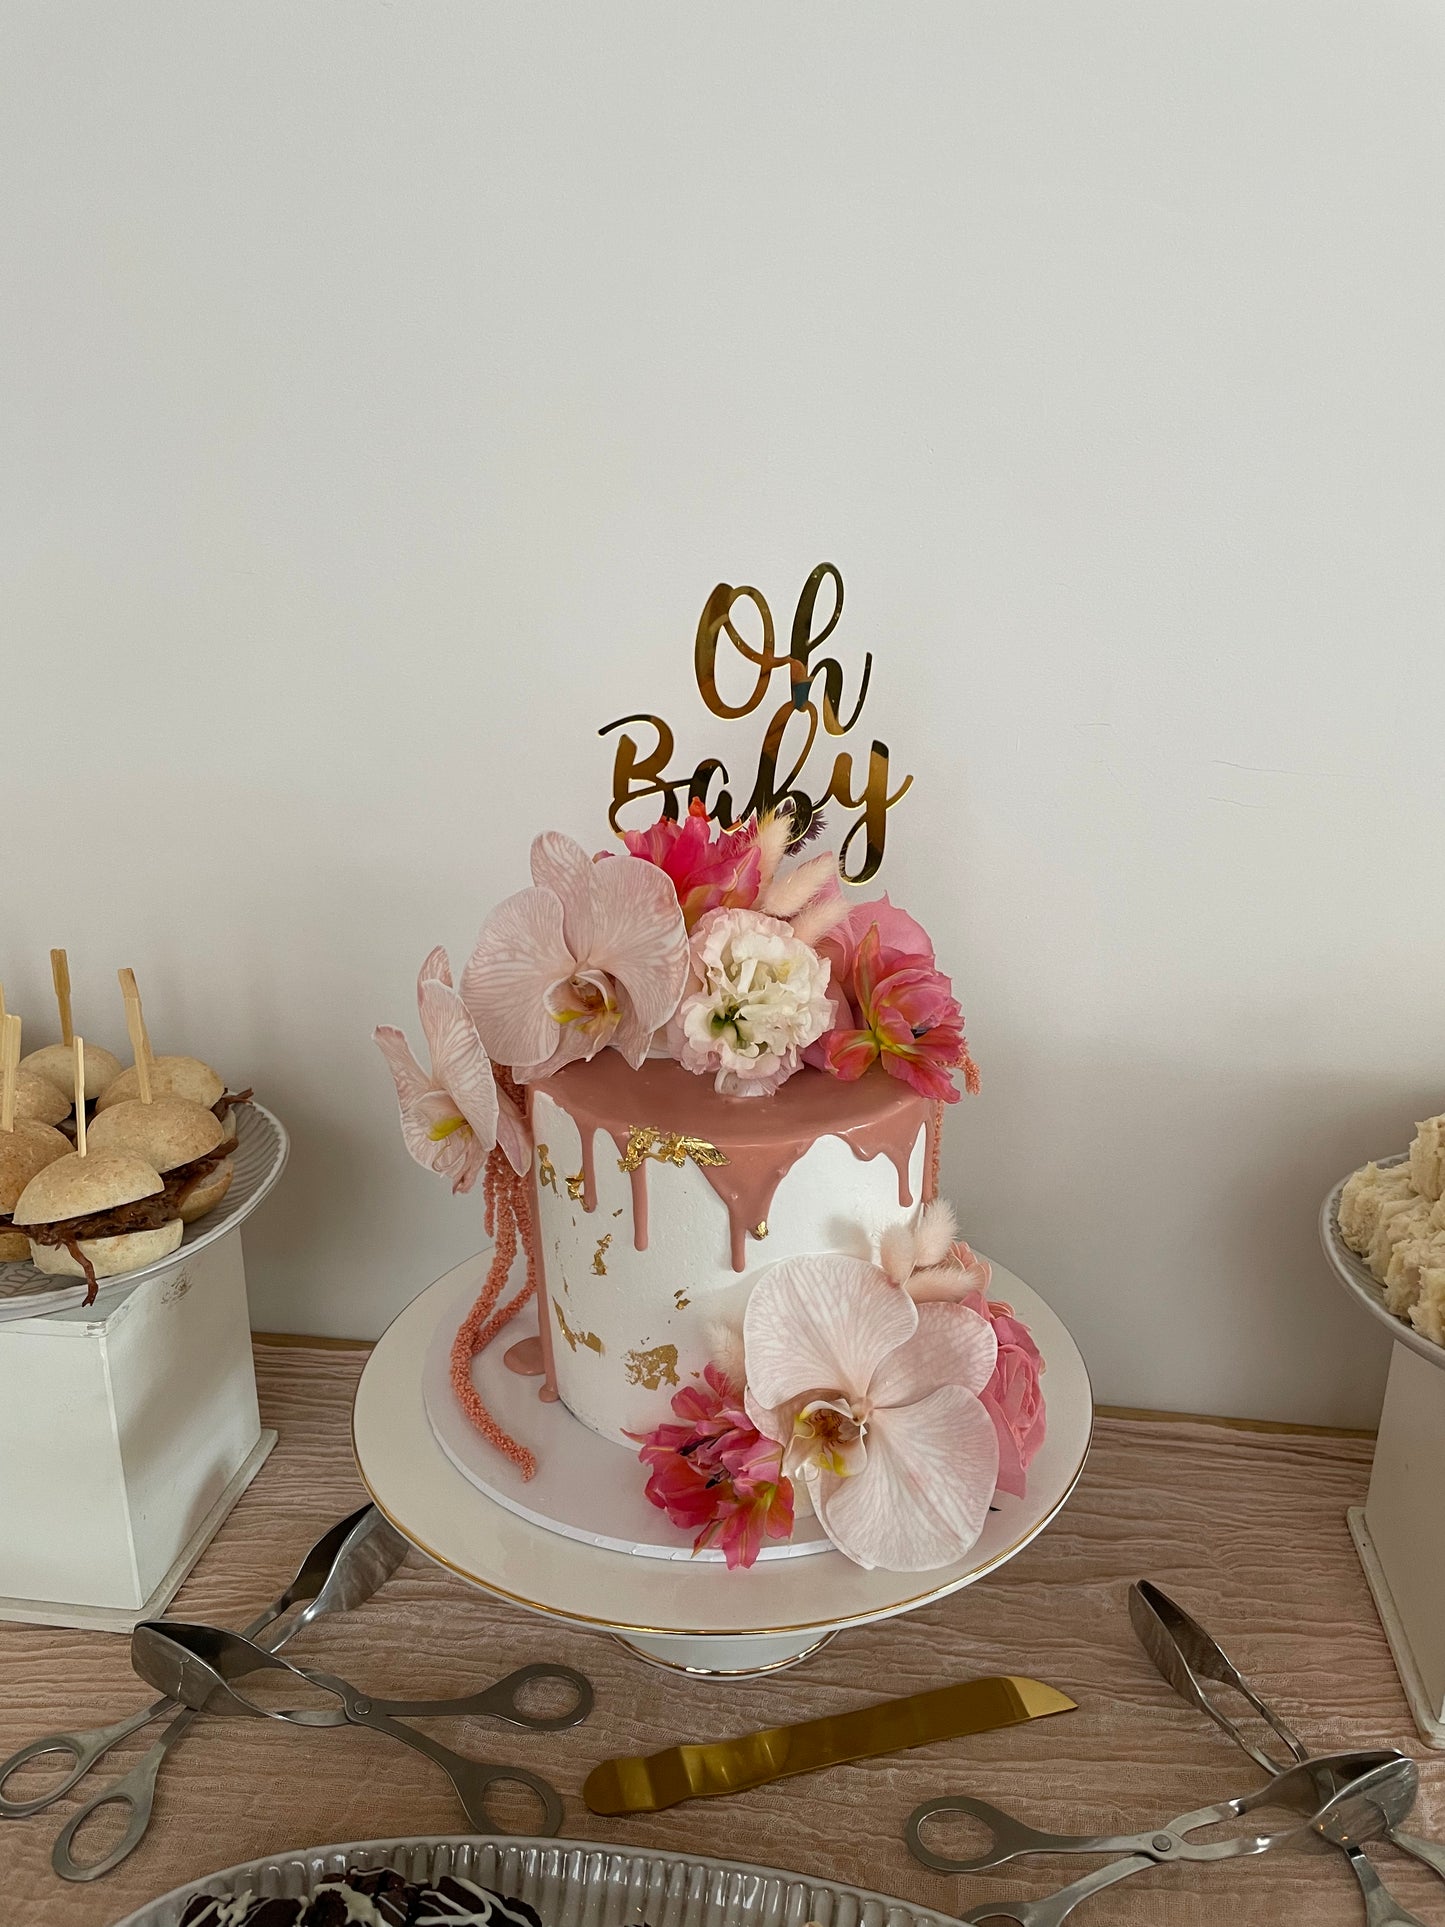 Pink Baby Shower with buffet high tea